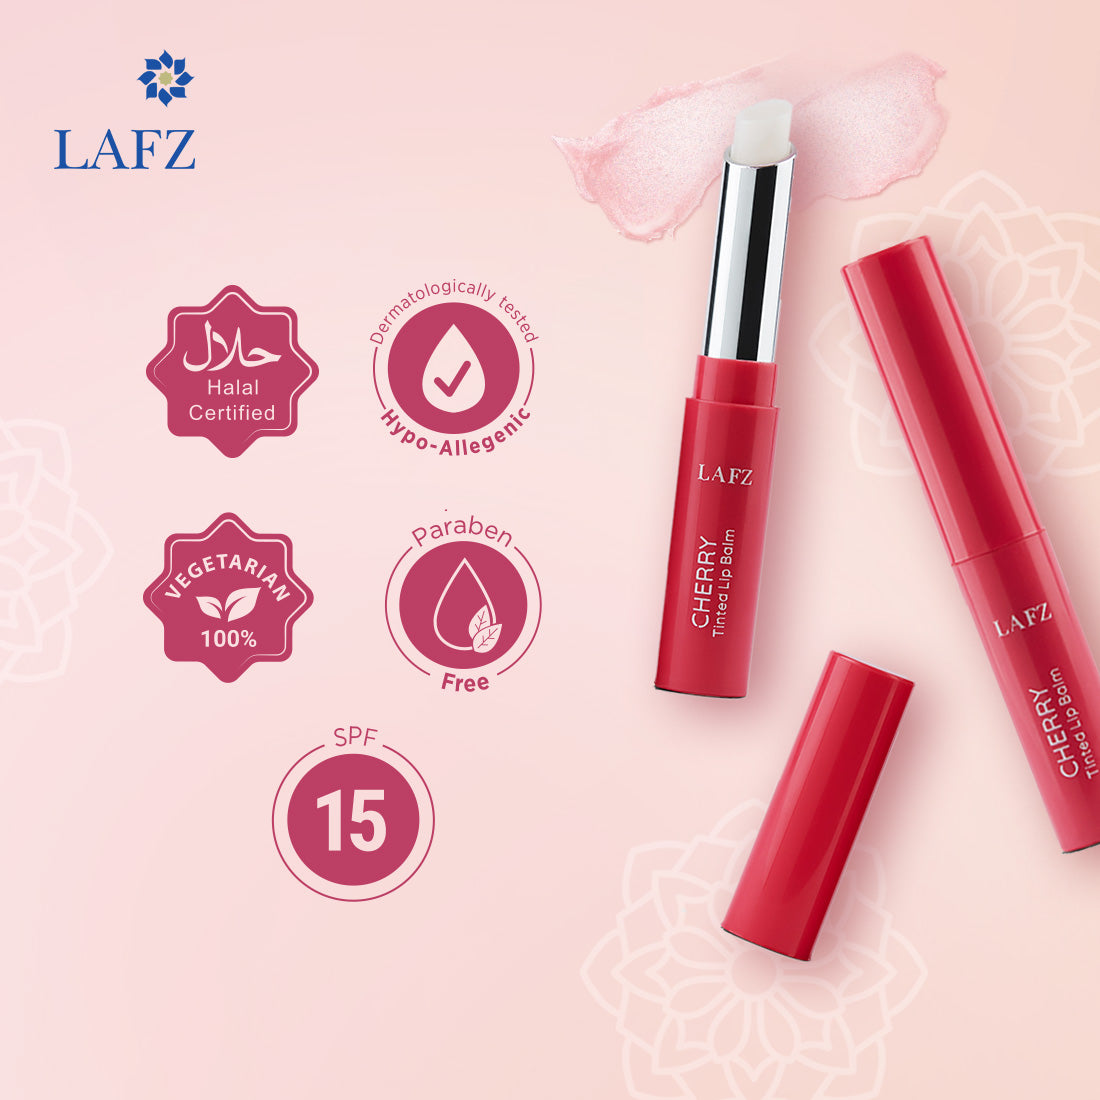 Lafz Tinted Lip Balm (1.5g) - Cherry